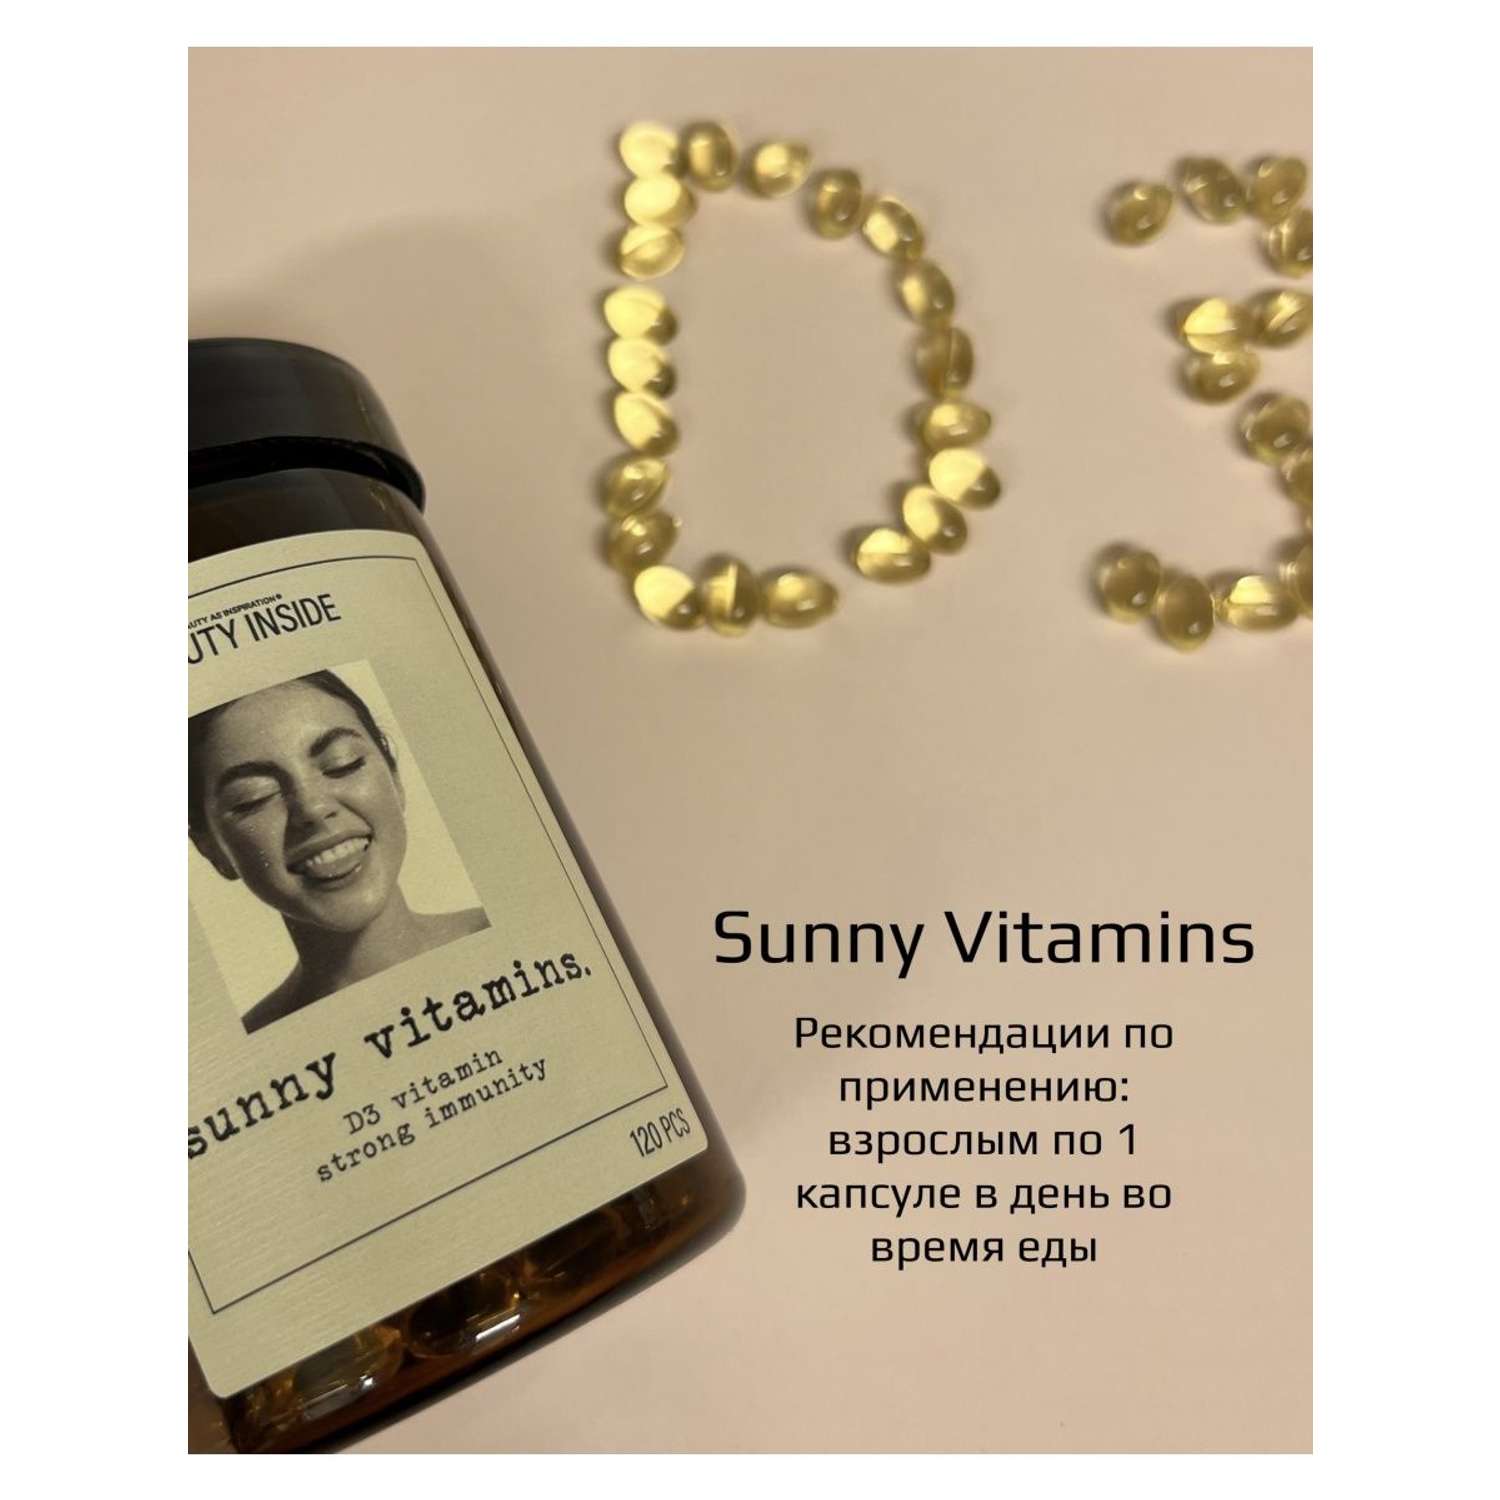 Биологически активная добавка BEAUTY INSIDE sunny vitamins. Капсулированный витамин D3 120 капсул - фото 5